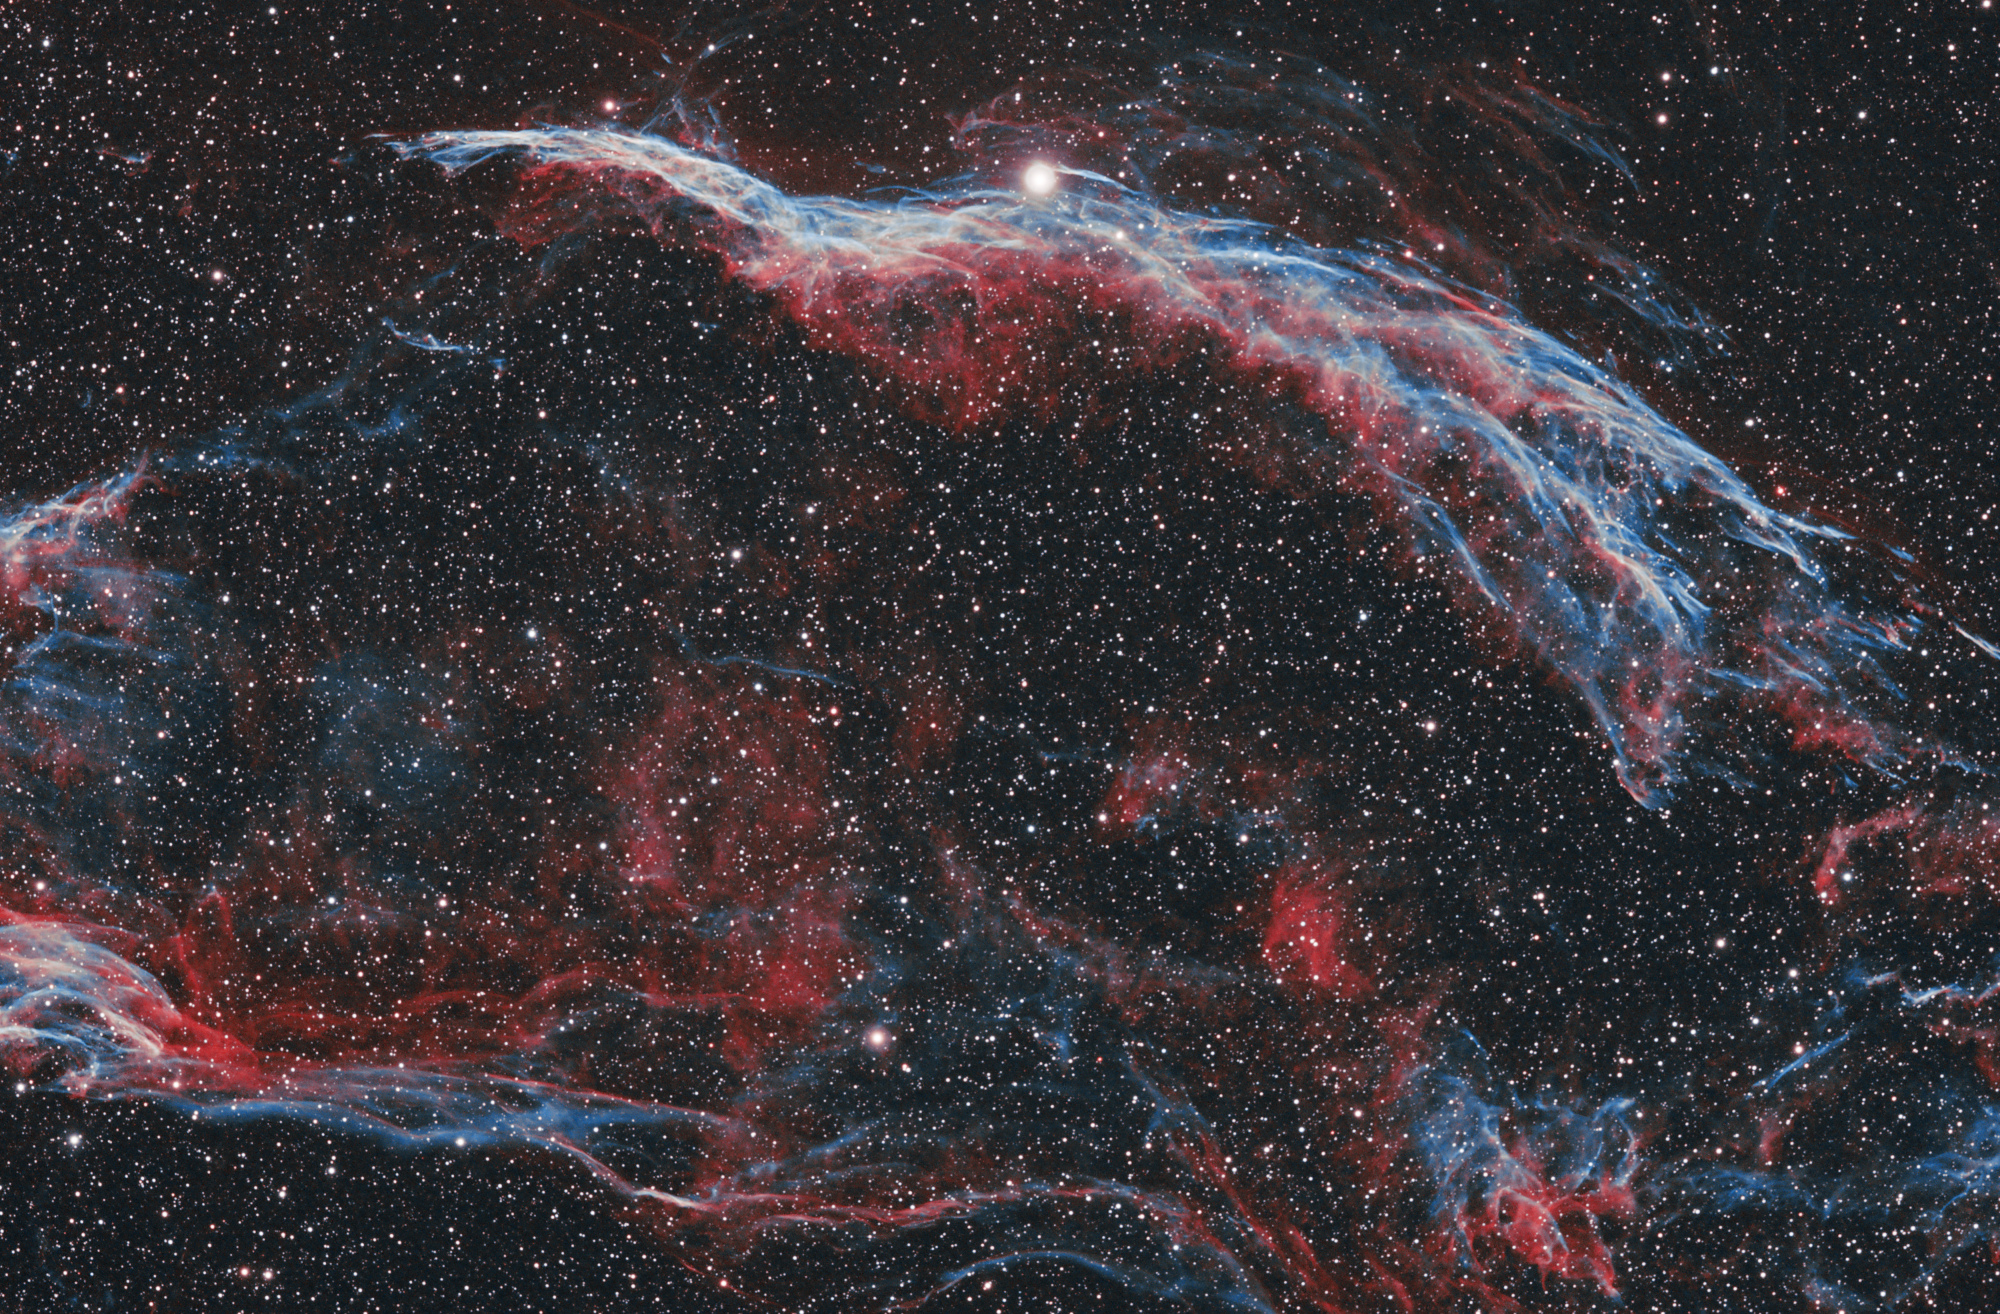 NGC_6960_SIRIL-HOO-1+2-iris-b-cs5-4-FINAL-x.jpg